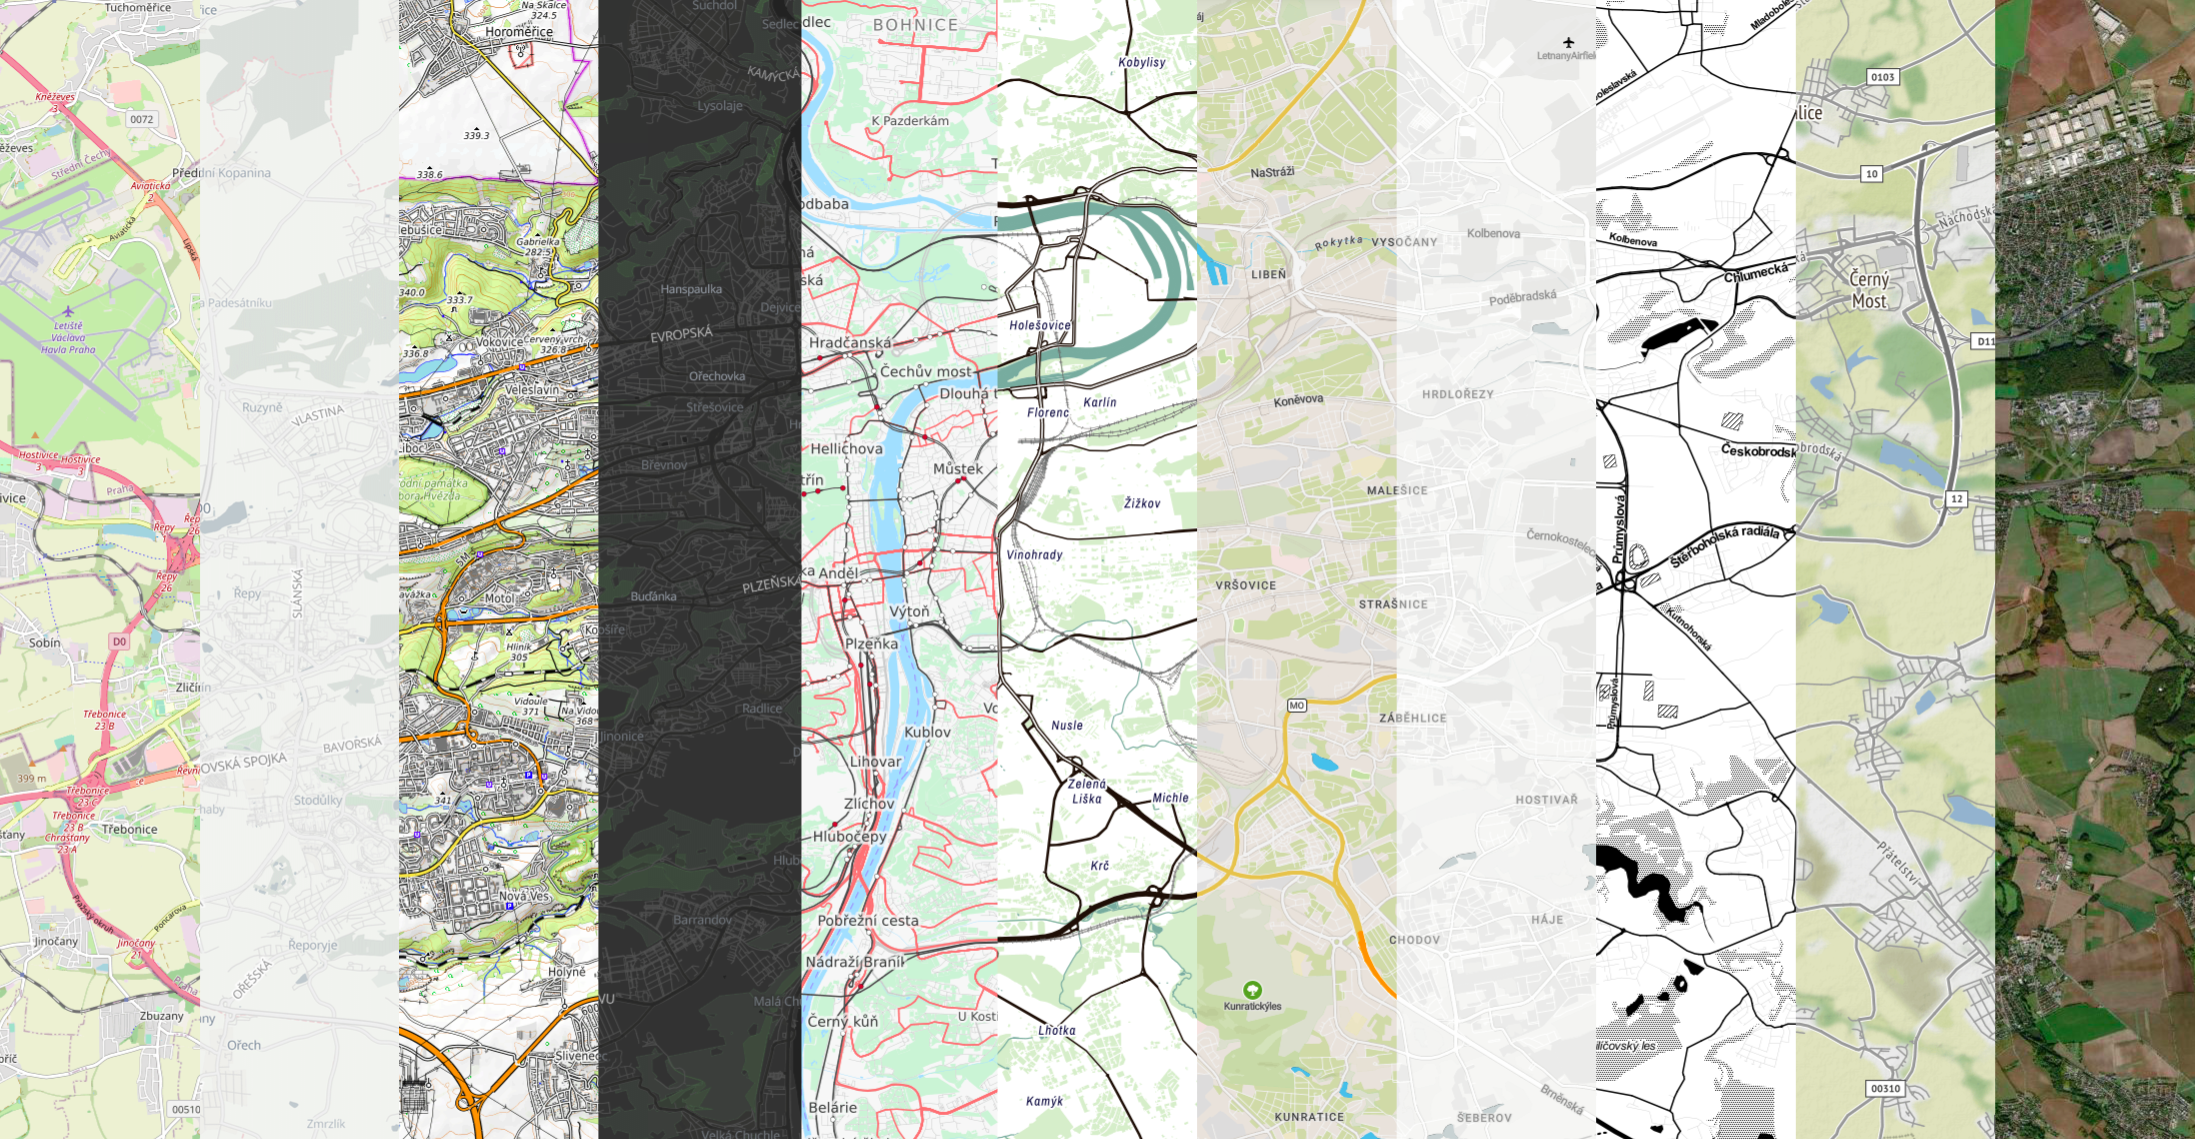 Image illustrating various basemaps